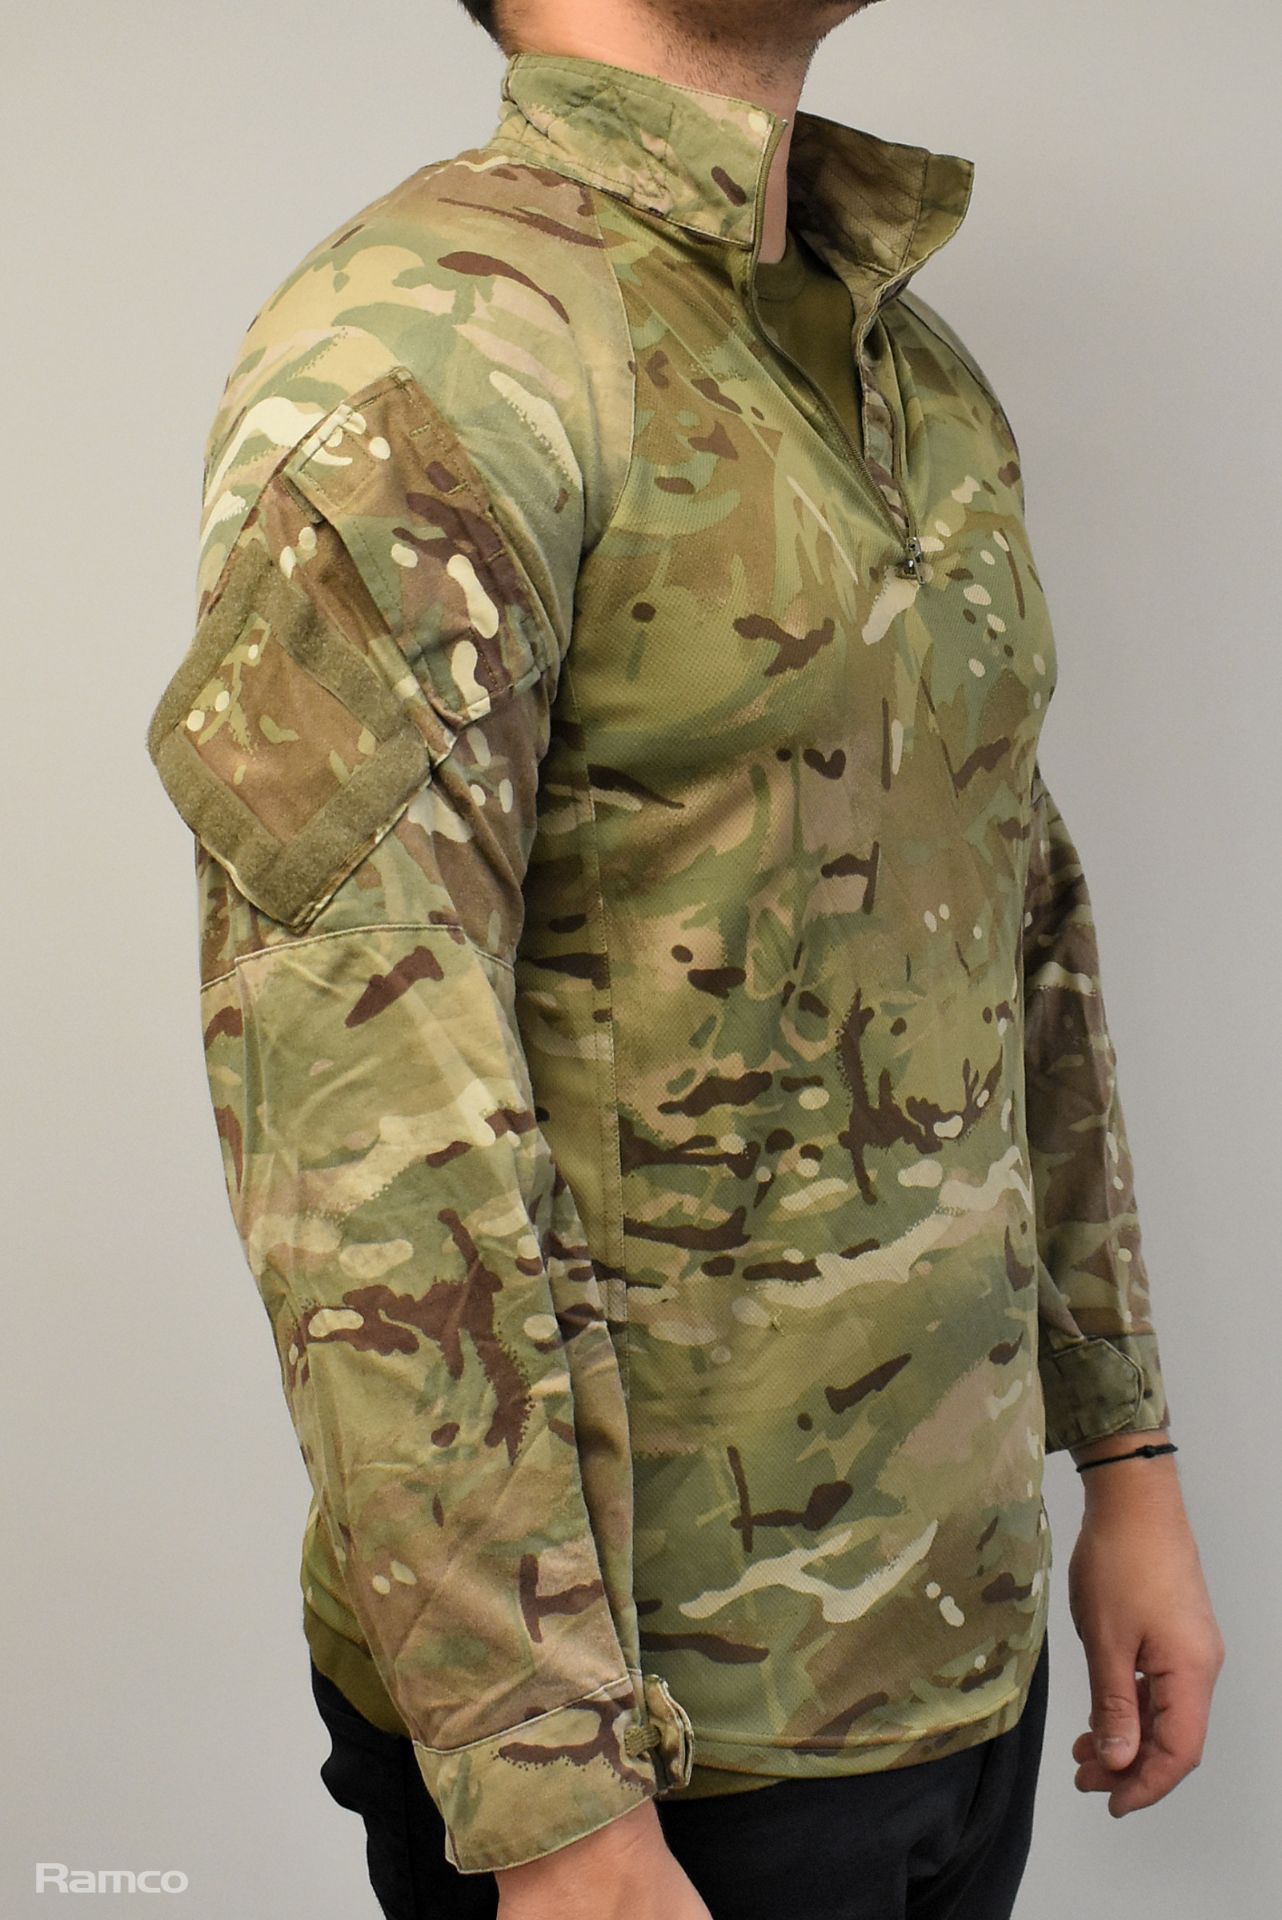 80x British Army MTP UBAC's shirts - mixed types - mixed grades and sizes - Image 4 of 12